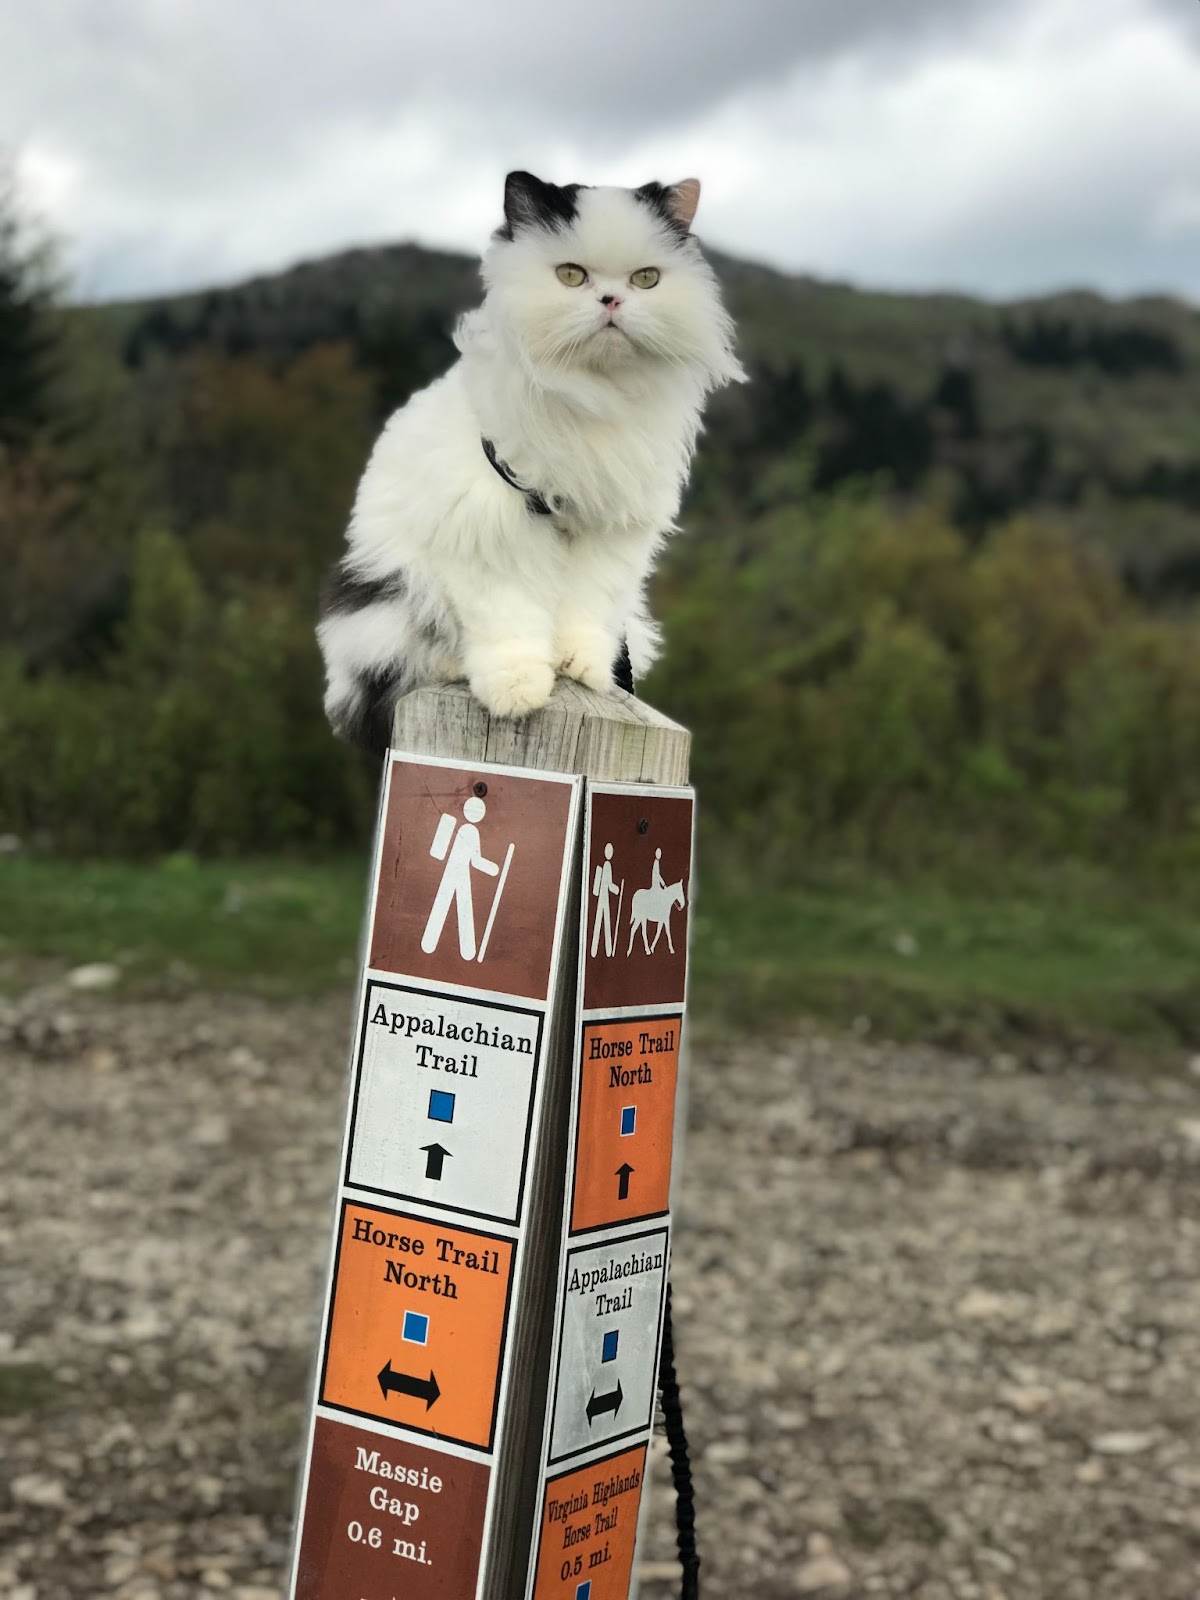 A cat on the Appalachian trail